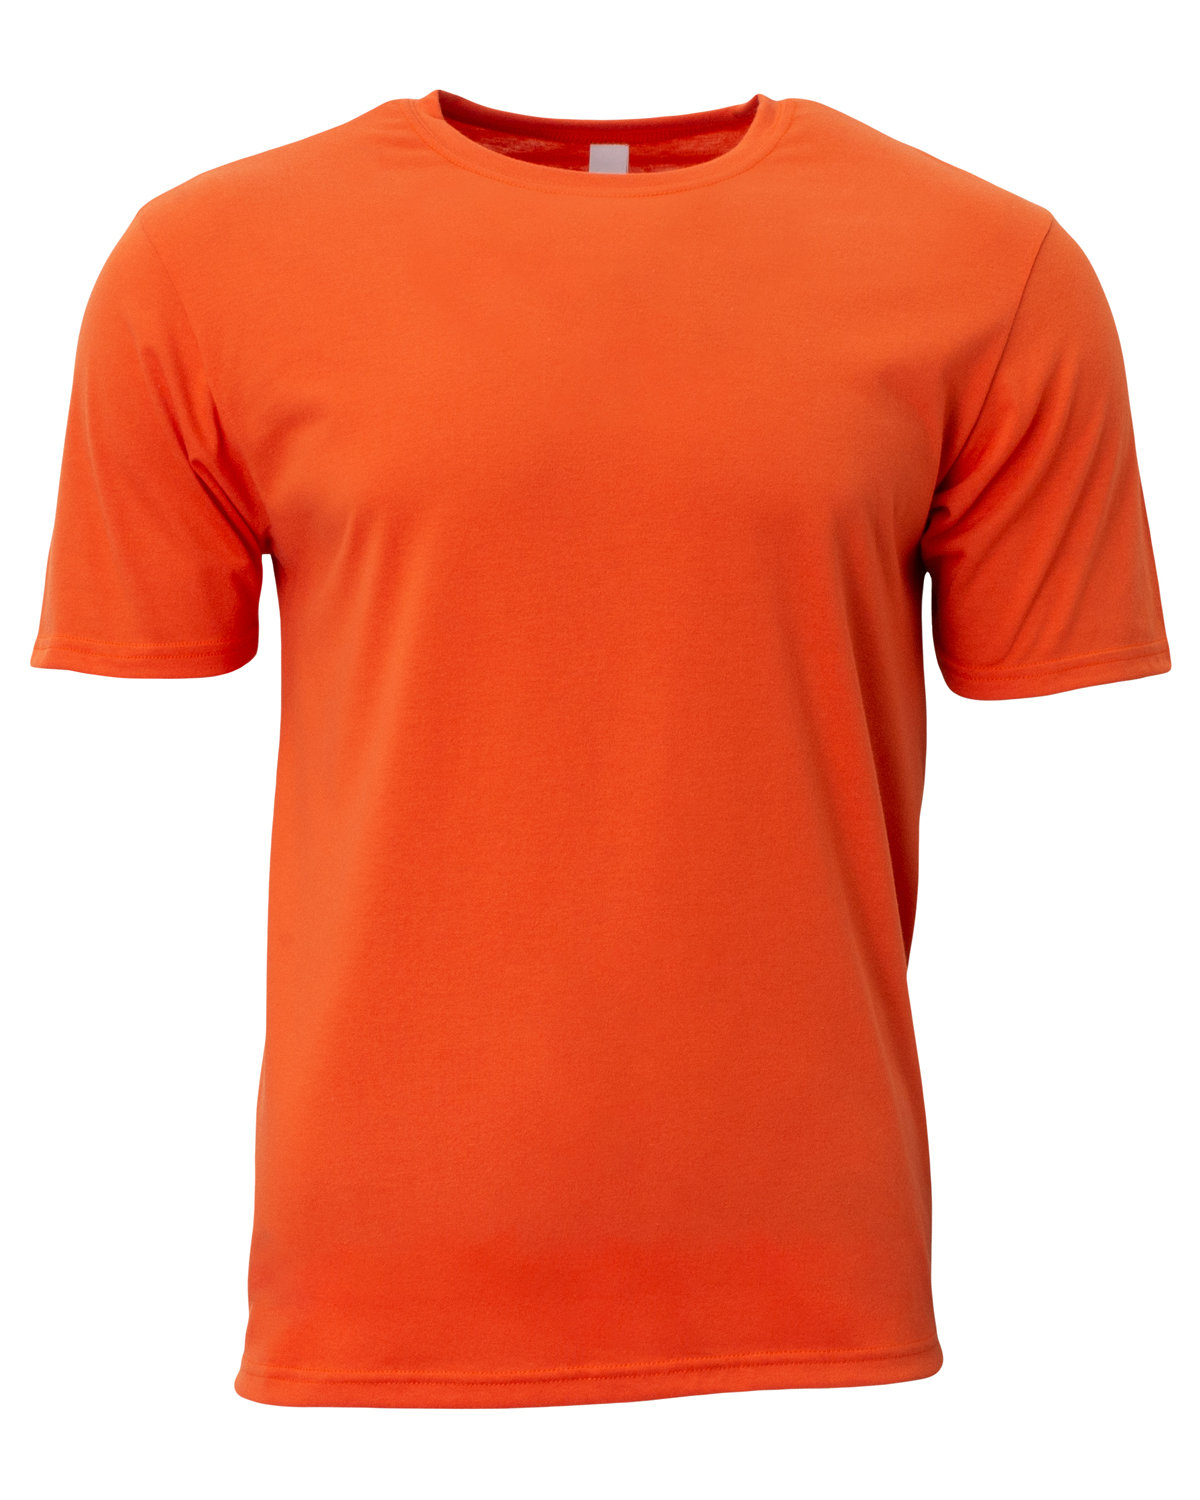 click to view Athletic Orange